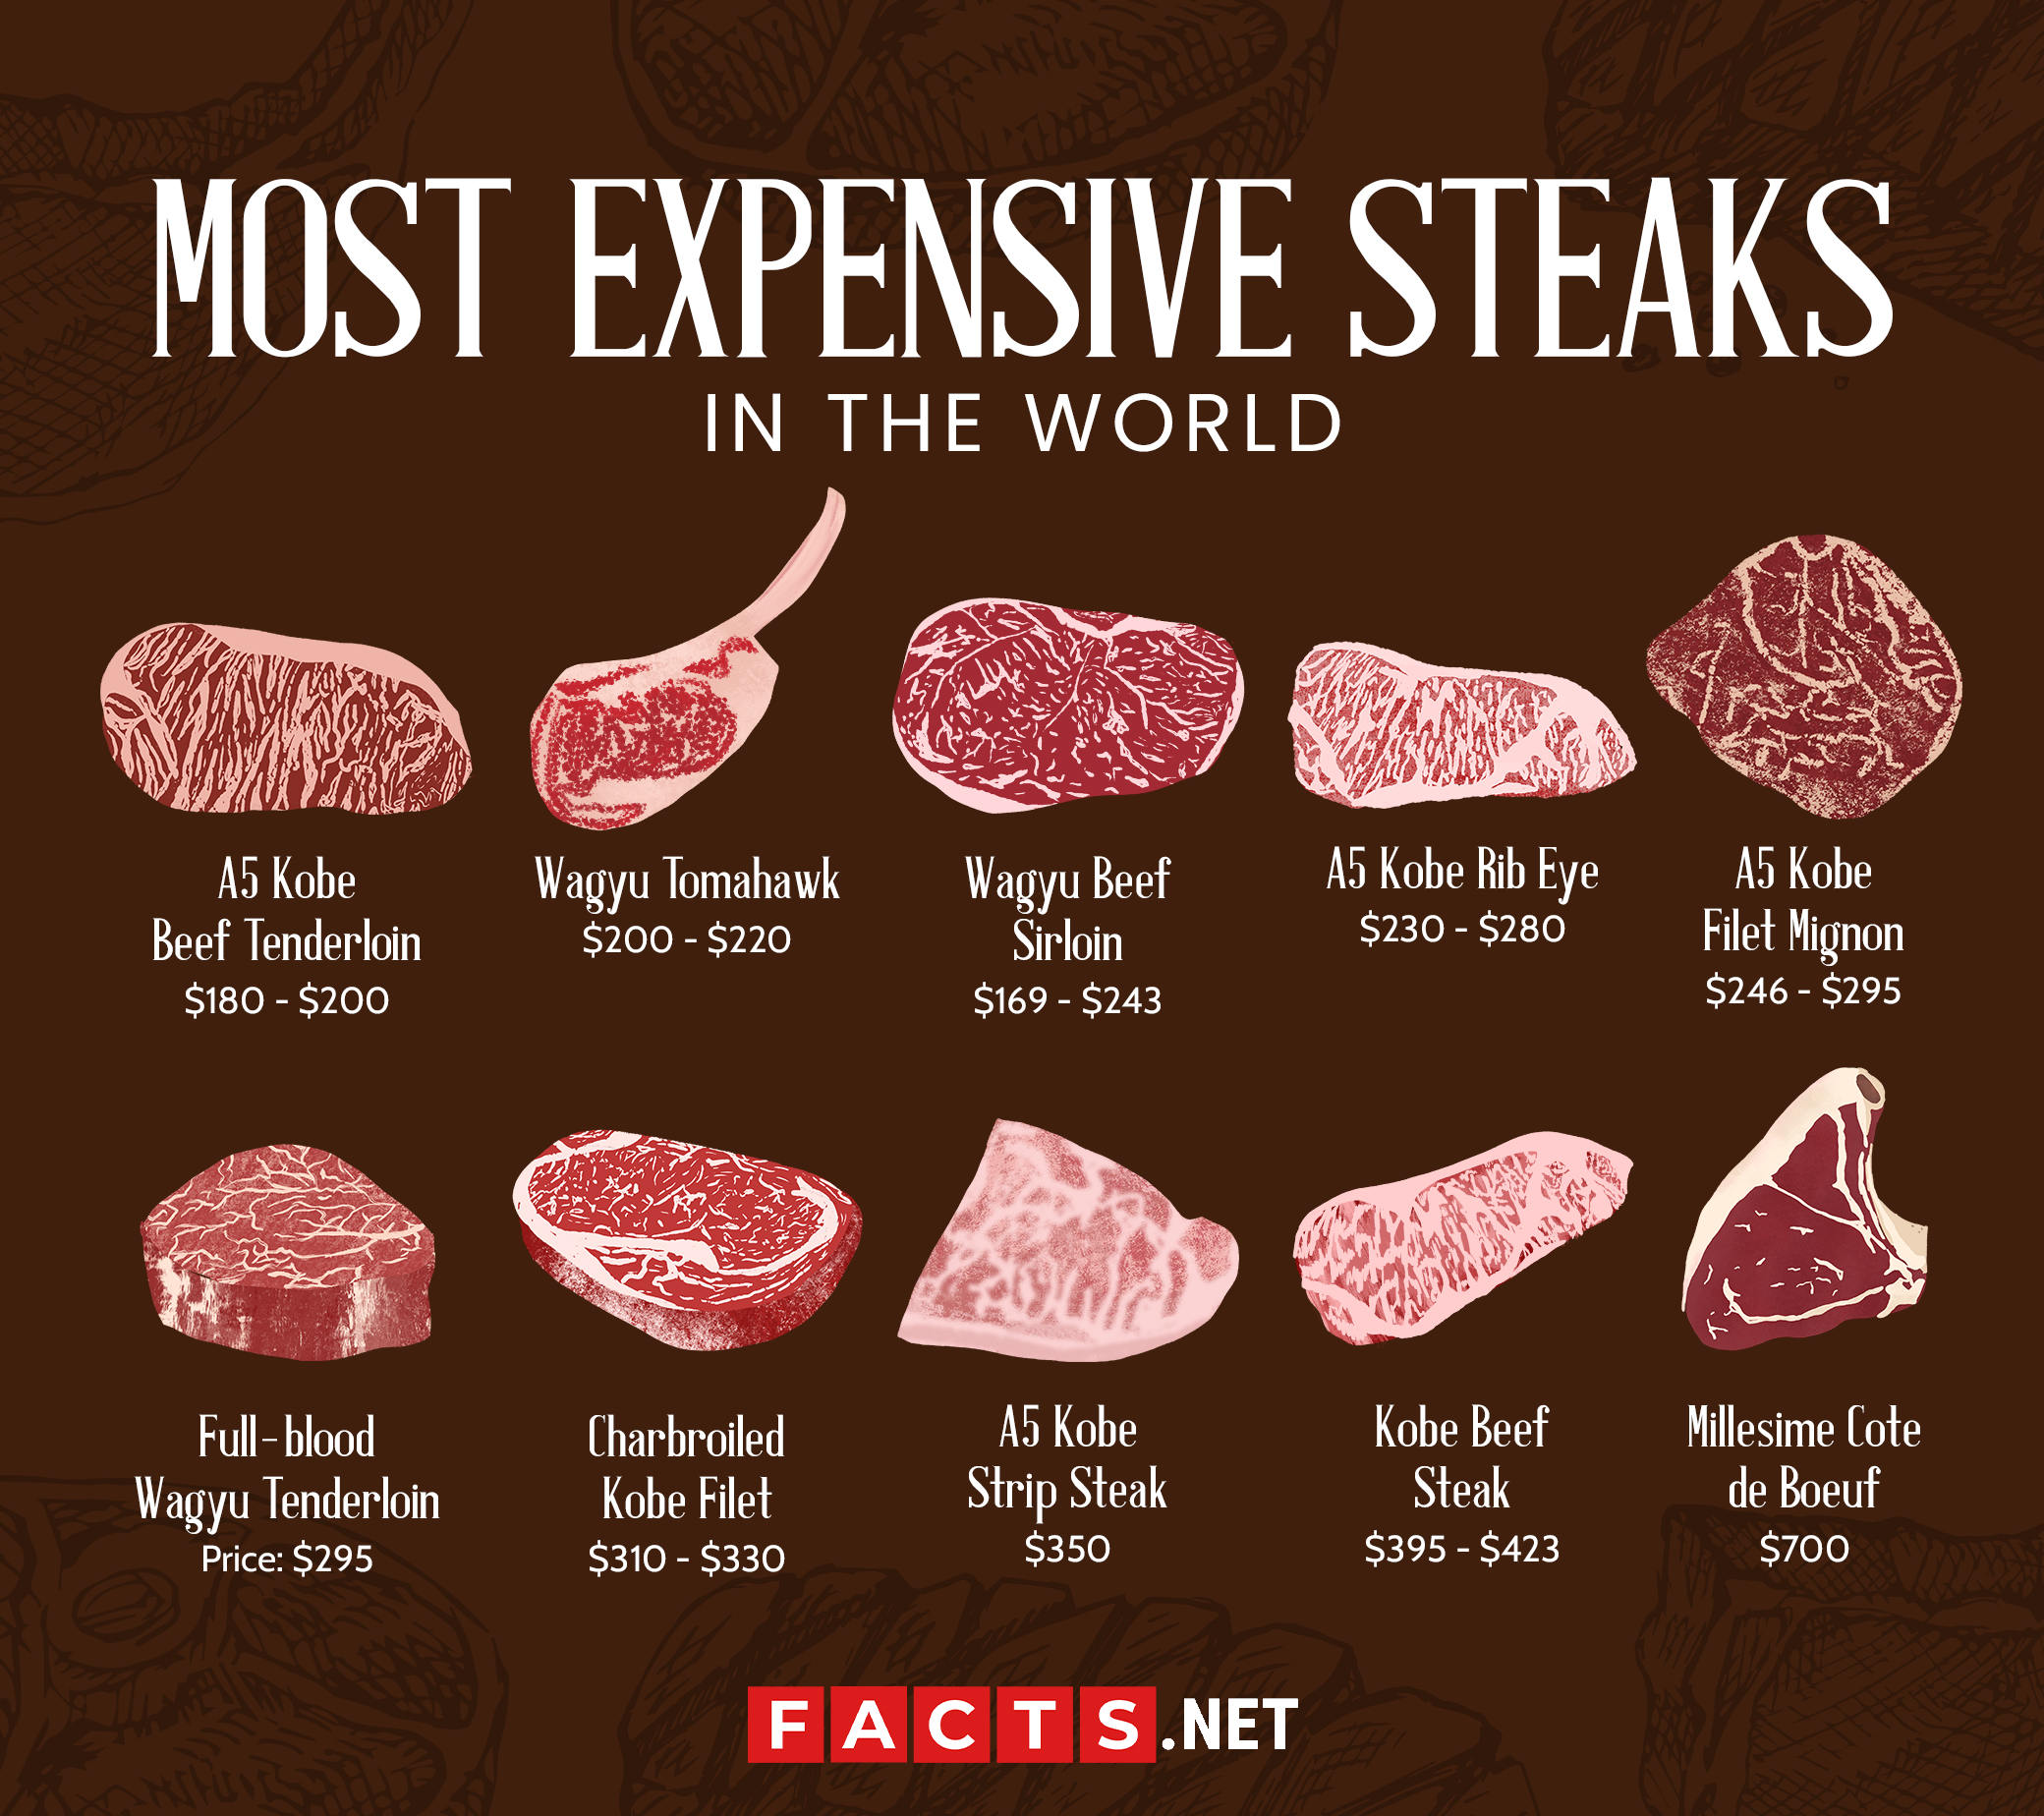 Is sirloin steak expensive?